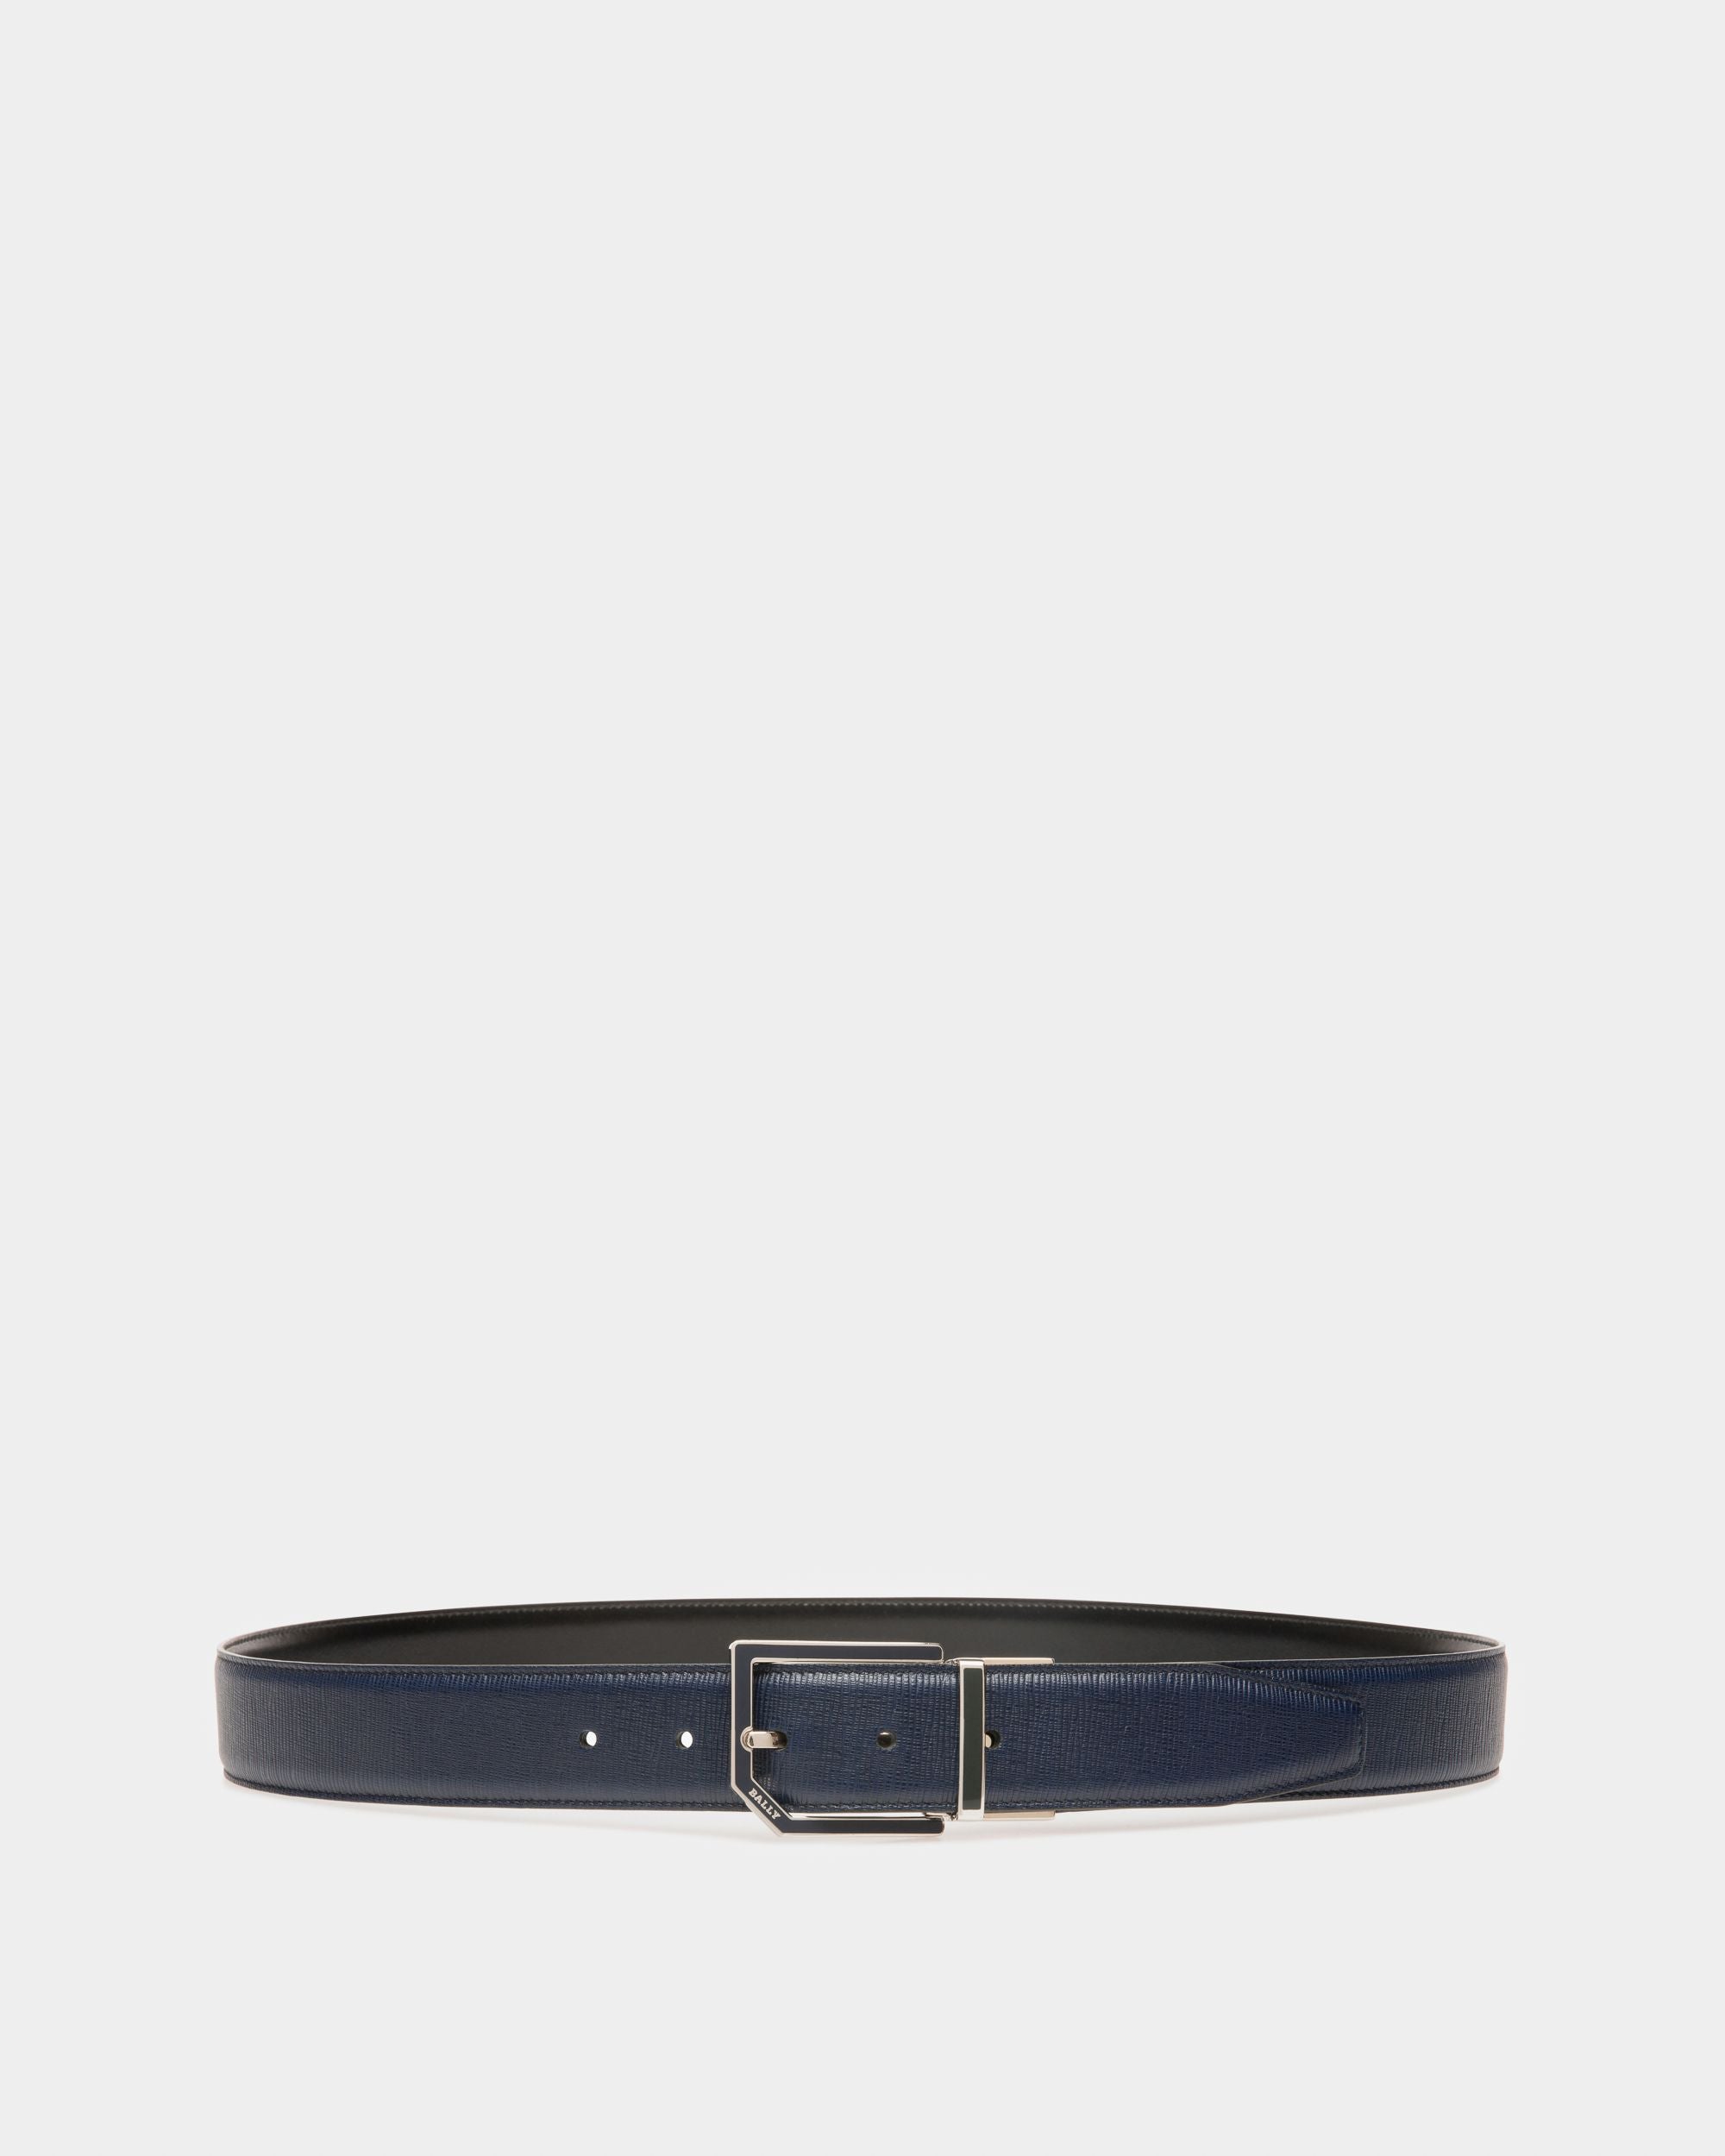 Louis Vuitton Skater 35mm Belt, Black, One Size